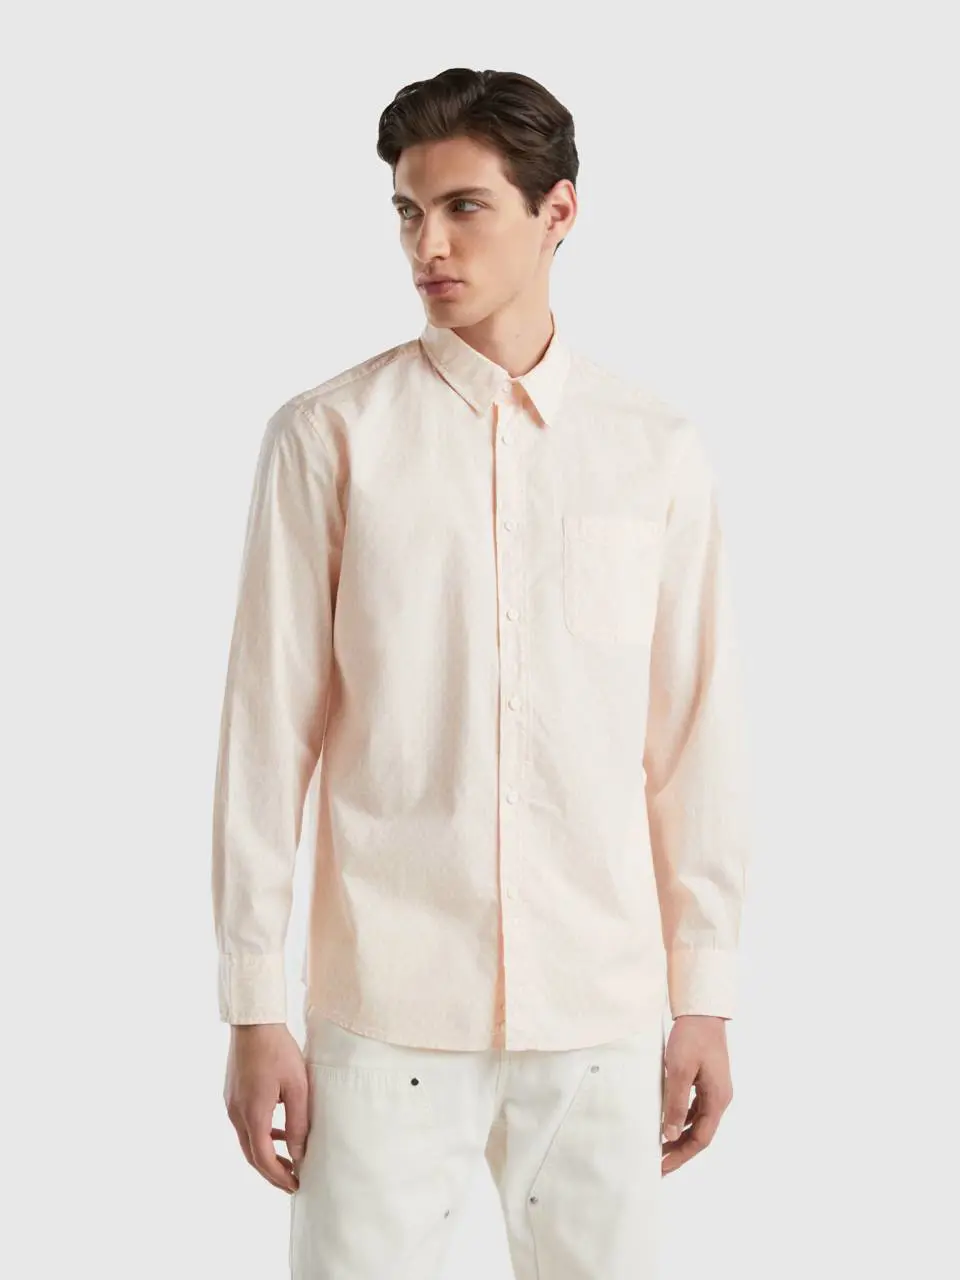 Benetton patterned shirt in lightweight cotton. 1